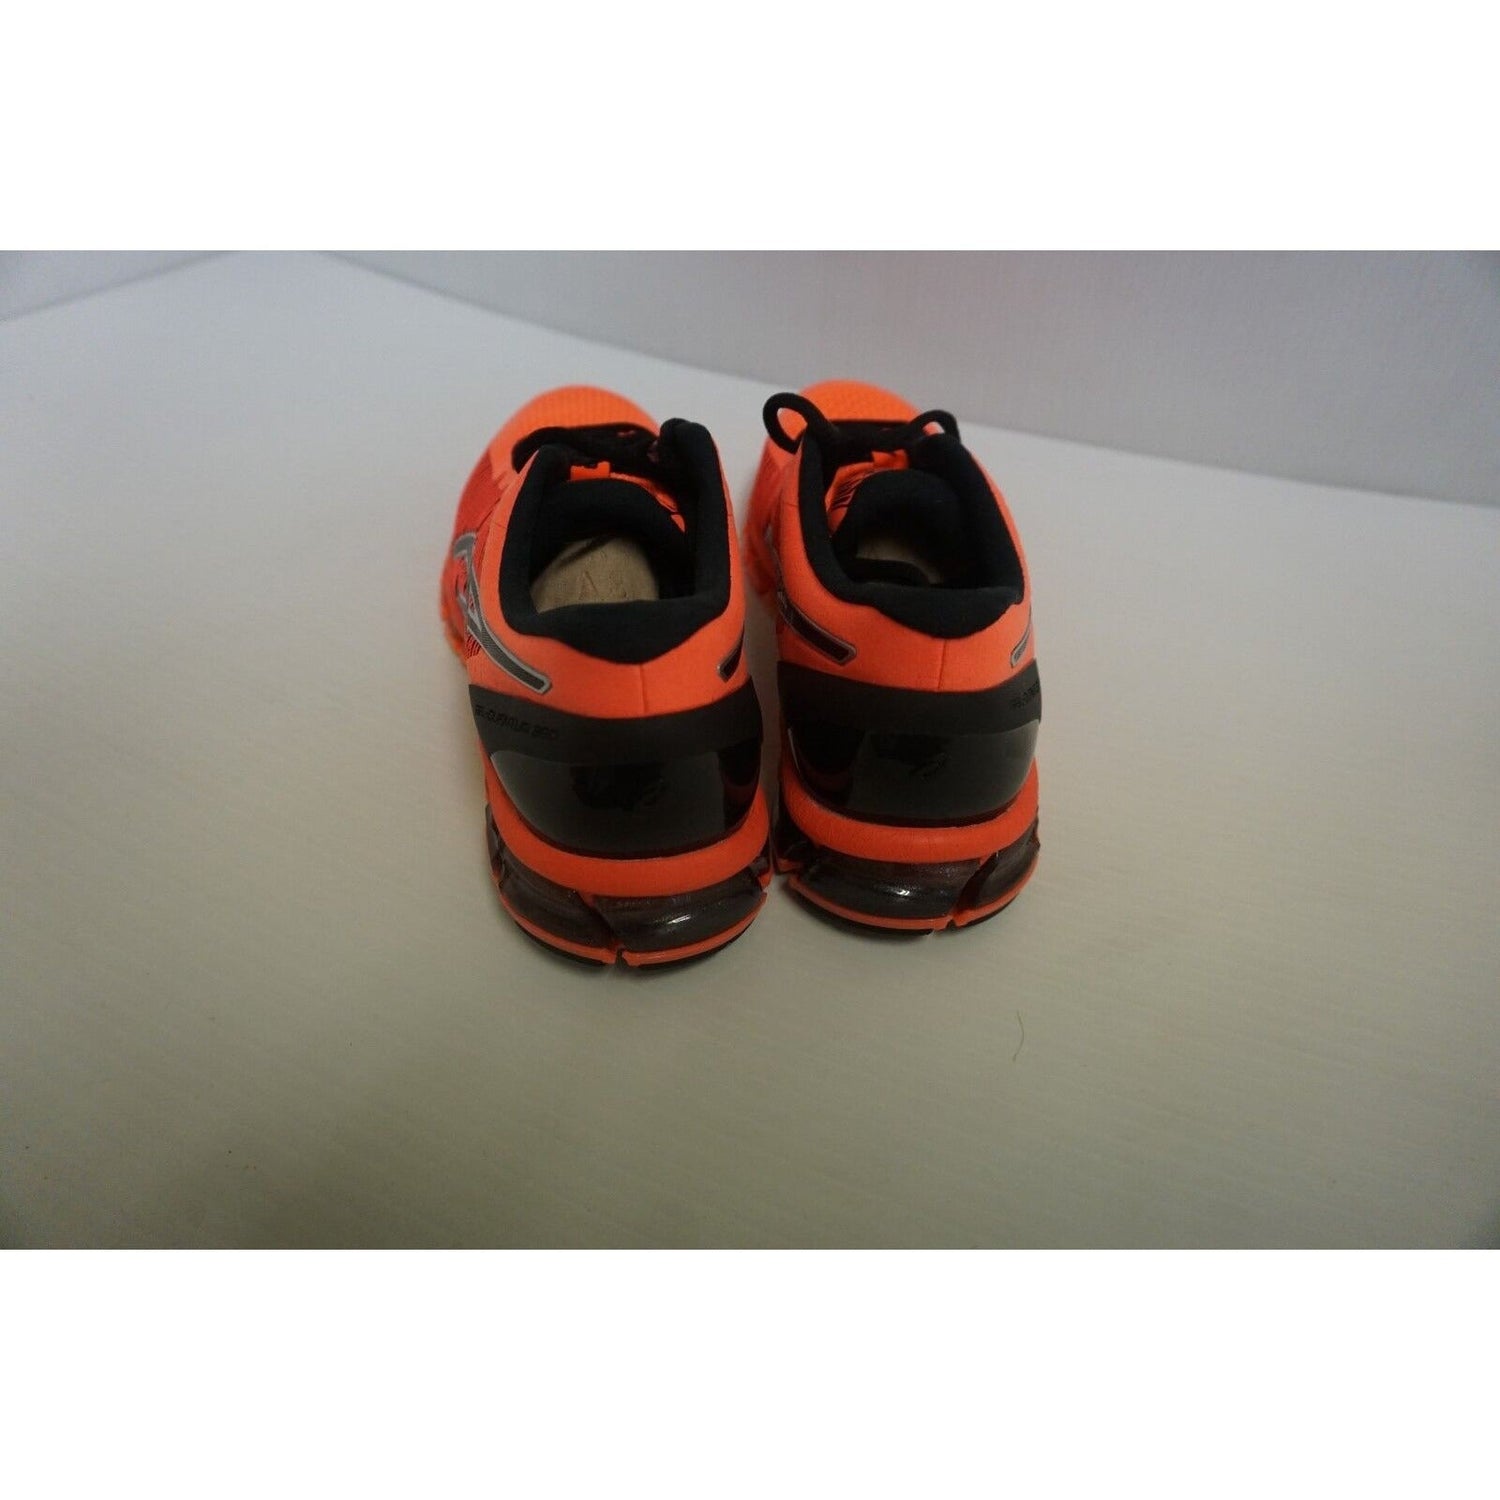 Asics women's running shoes gel quantum 360 cm flash coral black size 7 us - Classic Fashion Deals